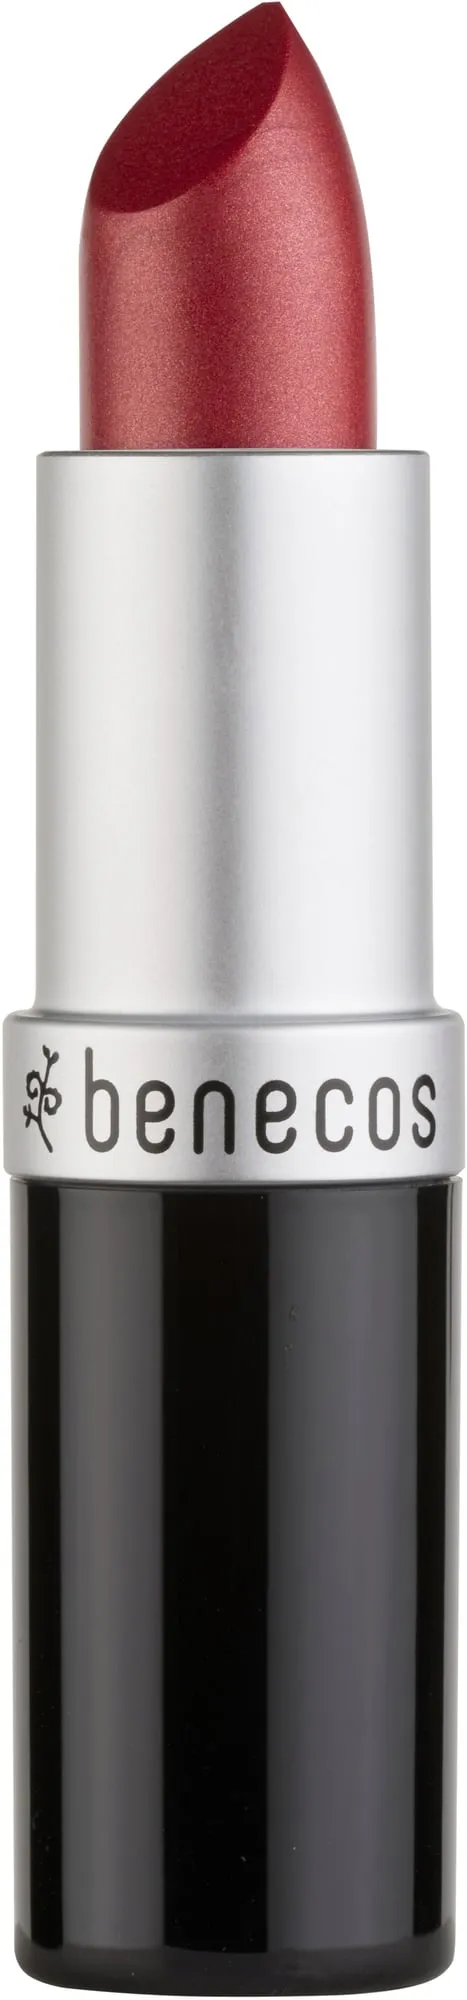 Benecos Natural naturalna kremowa szminka, chłodna czerwień (Merry Me), 4,5 g